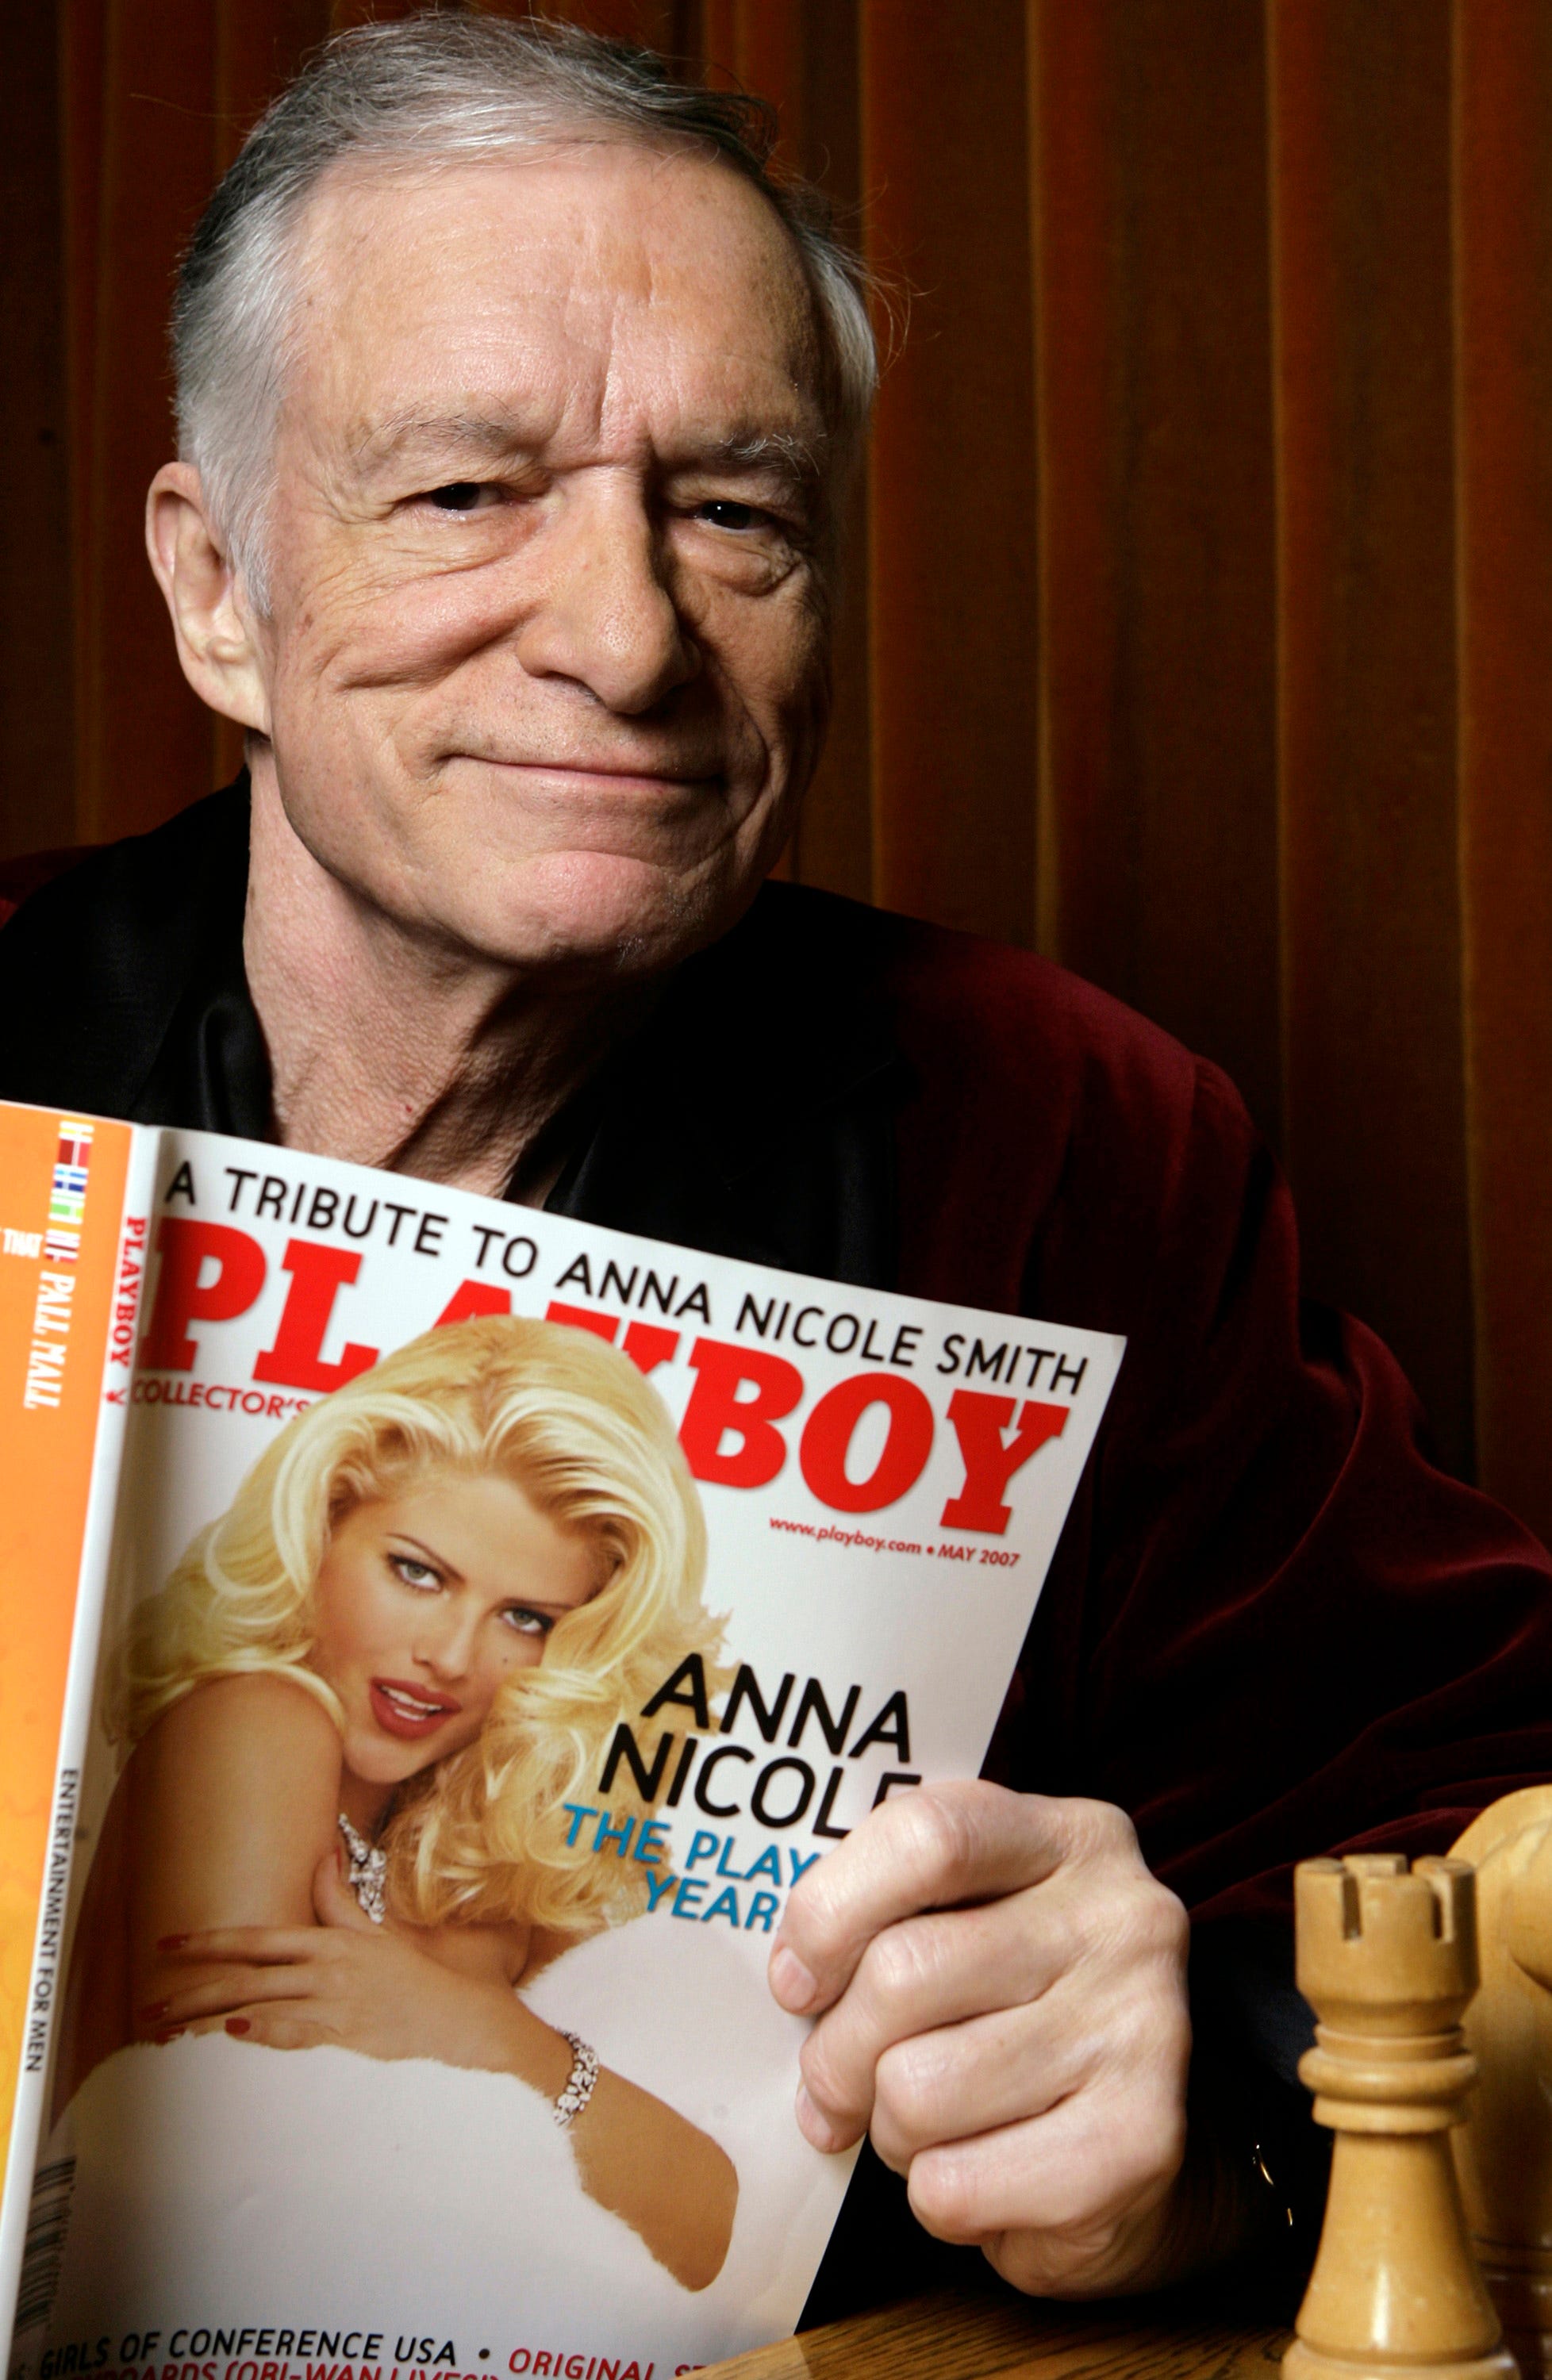 Sis Xxx Home Rep Site Youtube Com - Secrets of Playboy': Hugh Hefner docuseries' biggest allegations